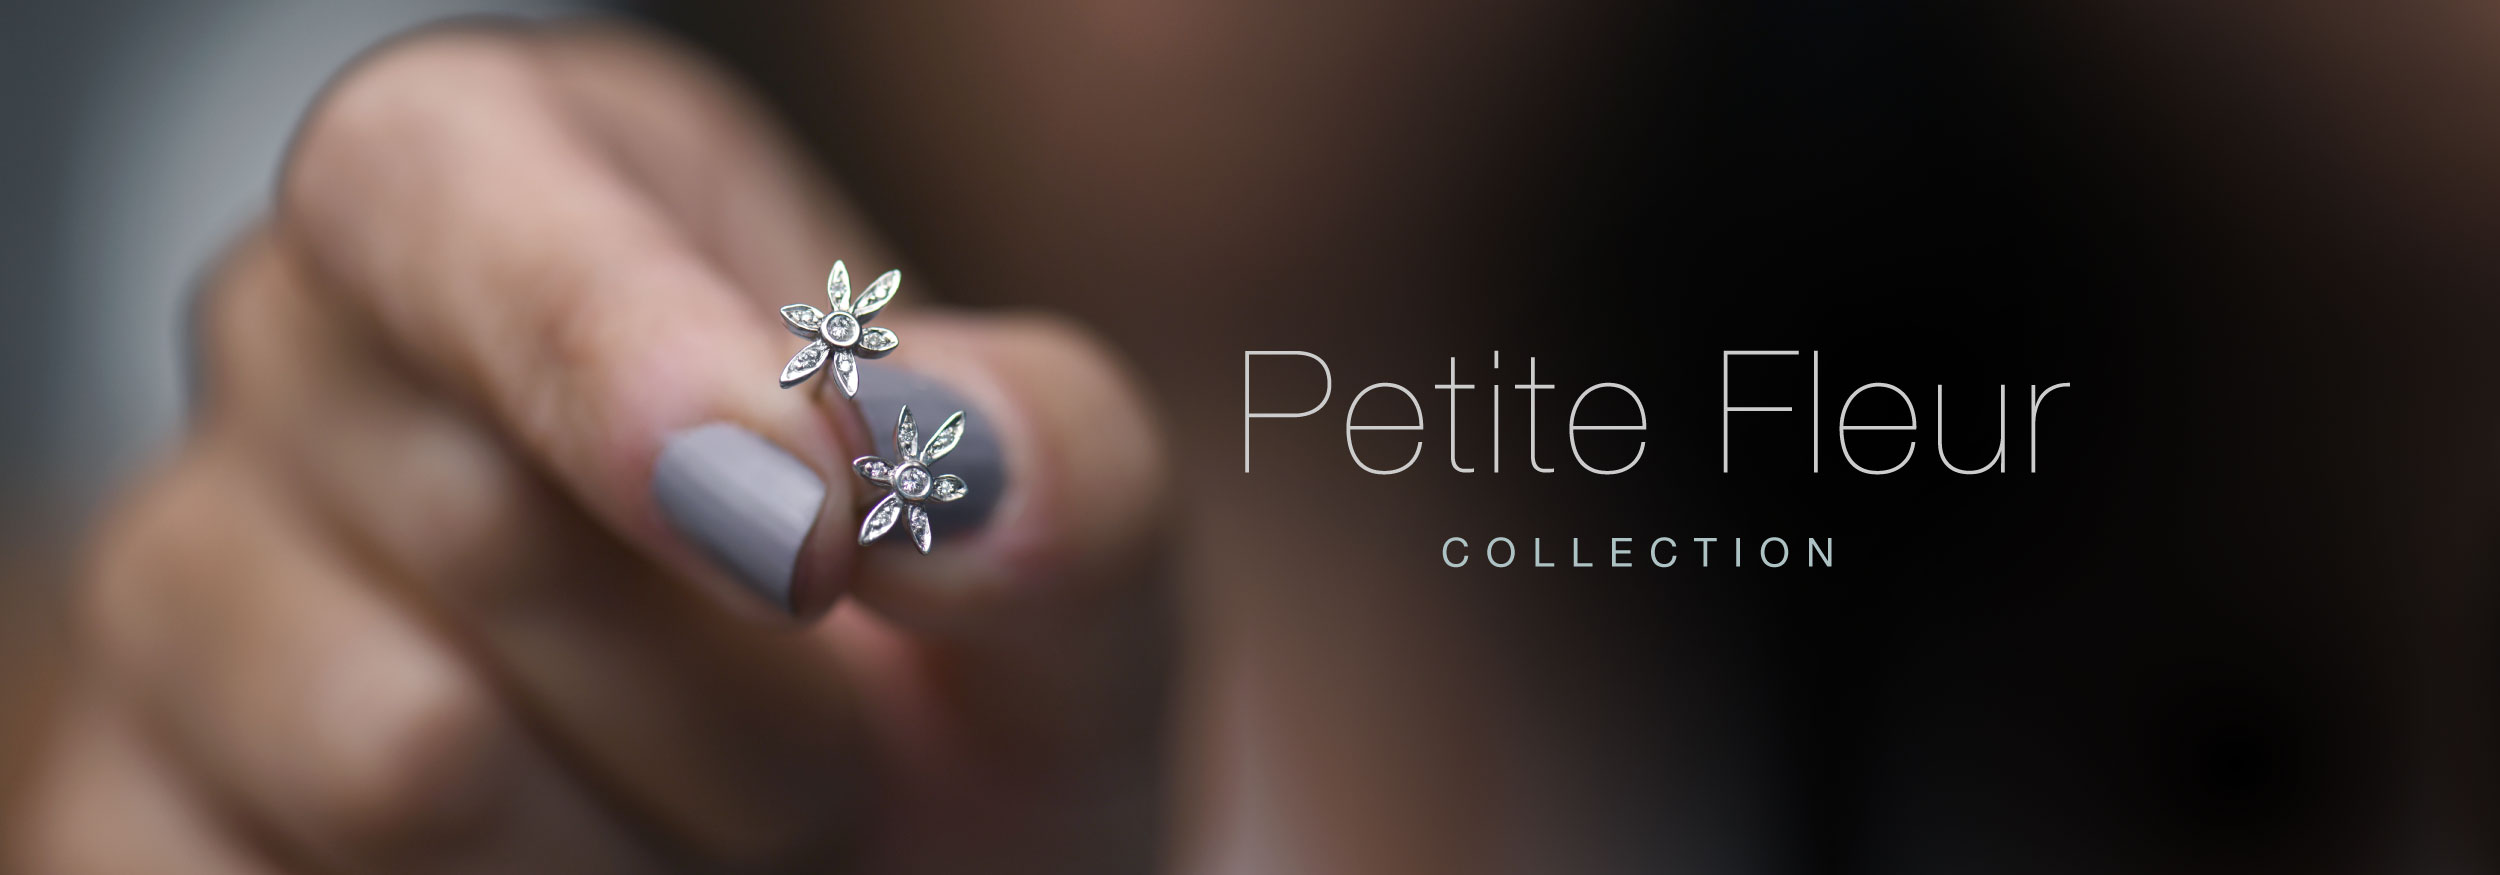 Wild Lily Petite Fleur Diamond Earrings Banner